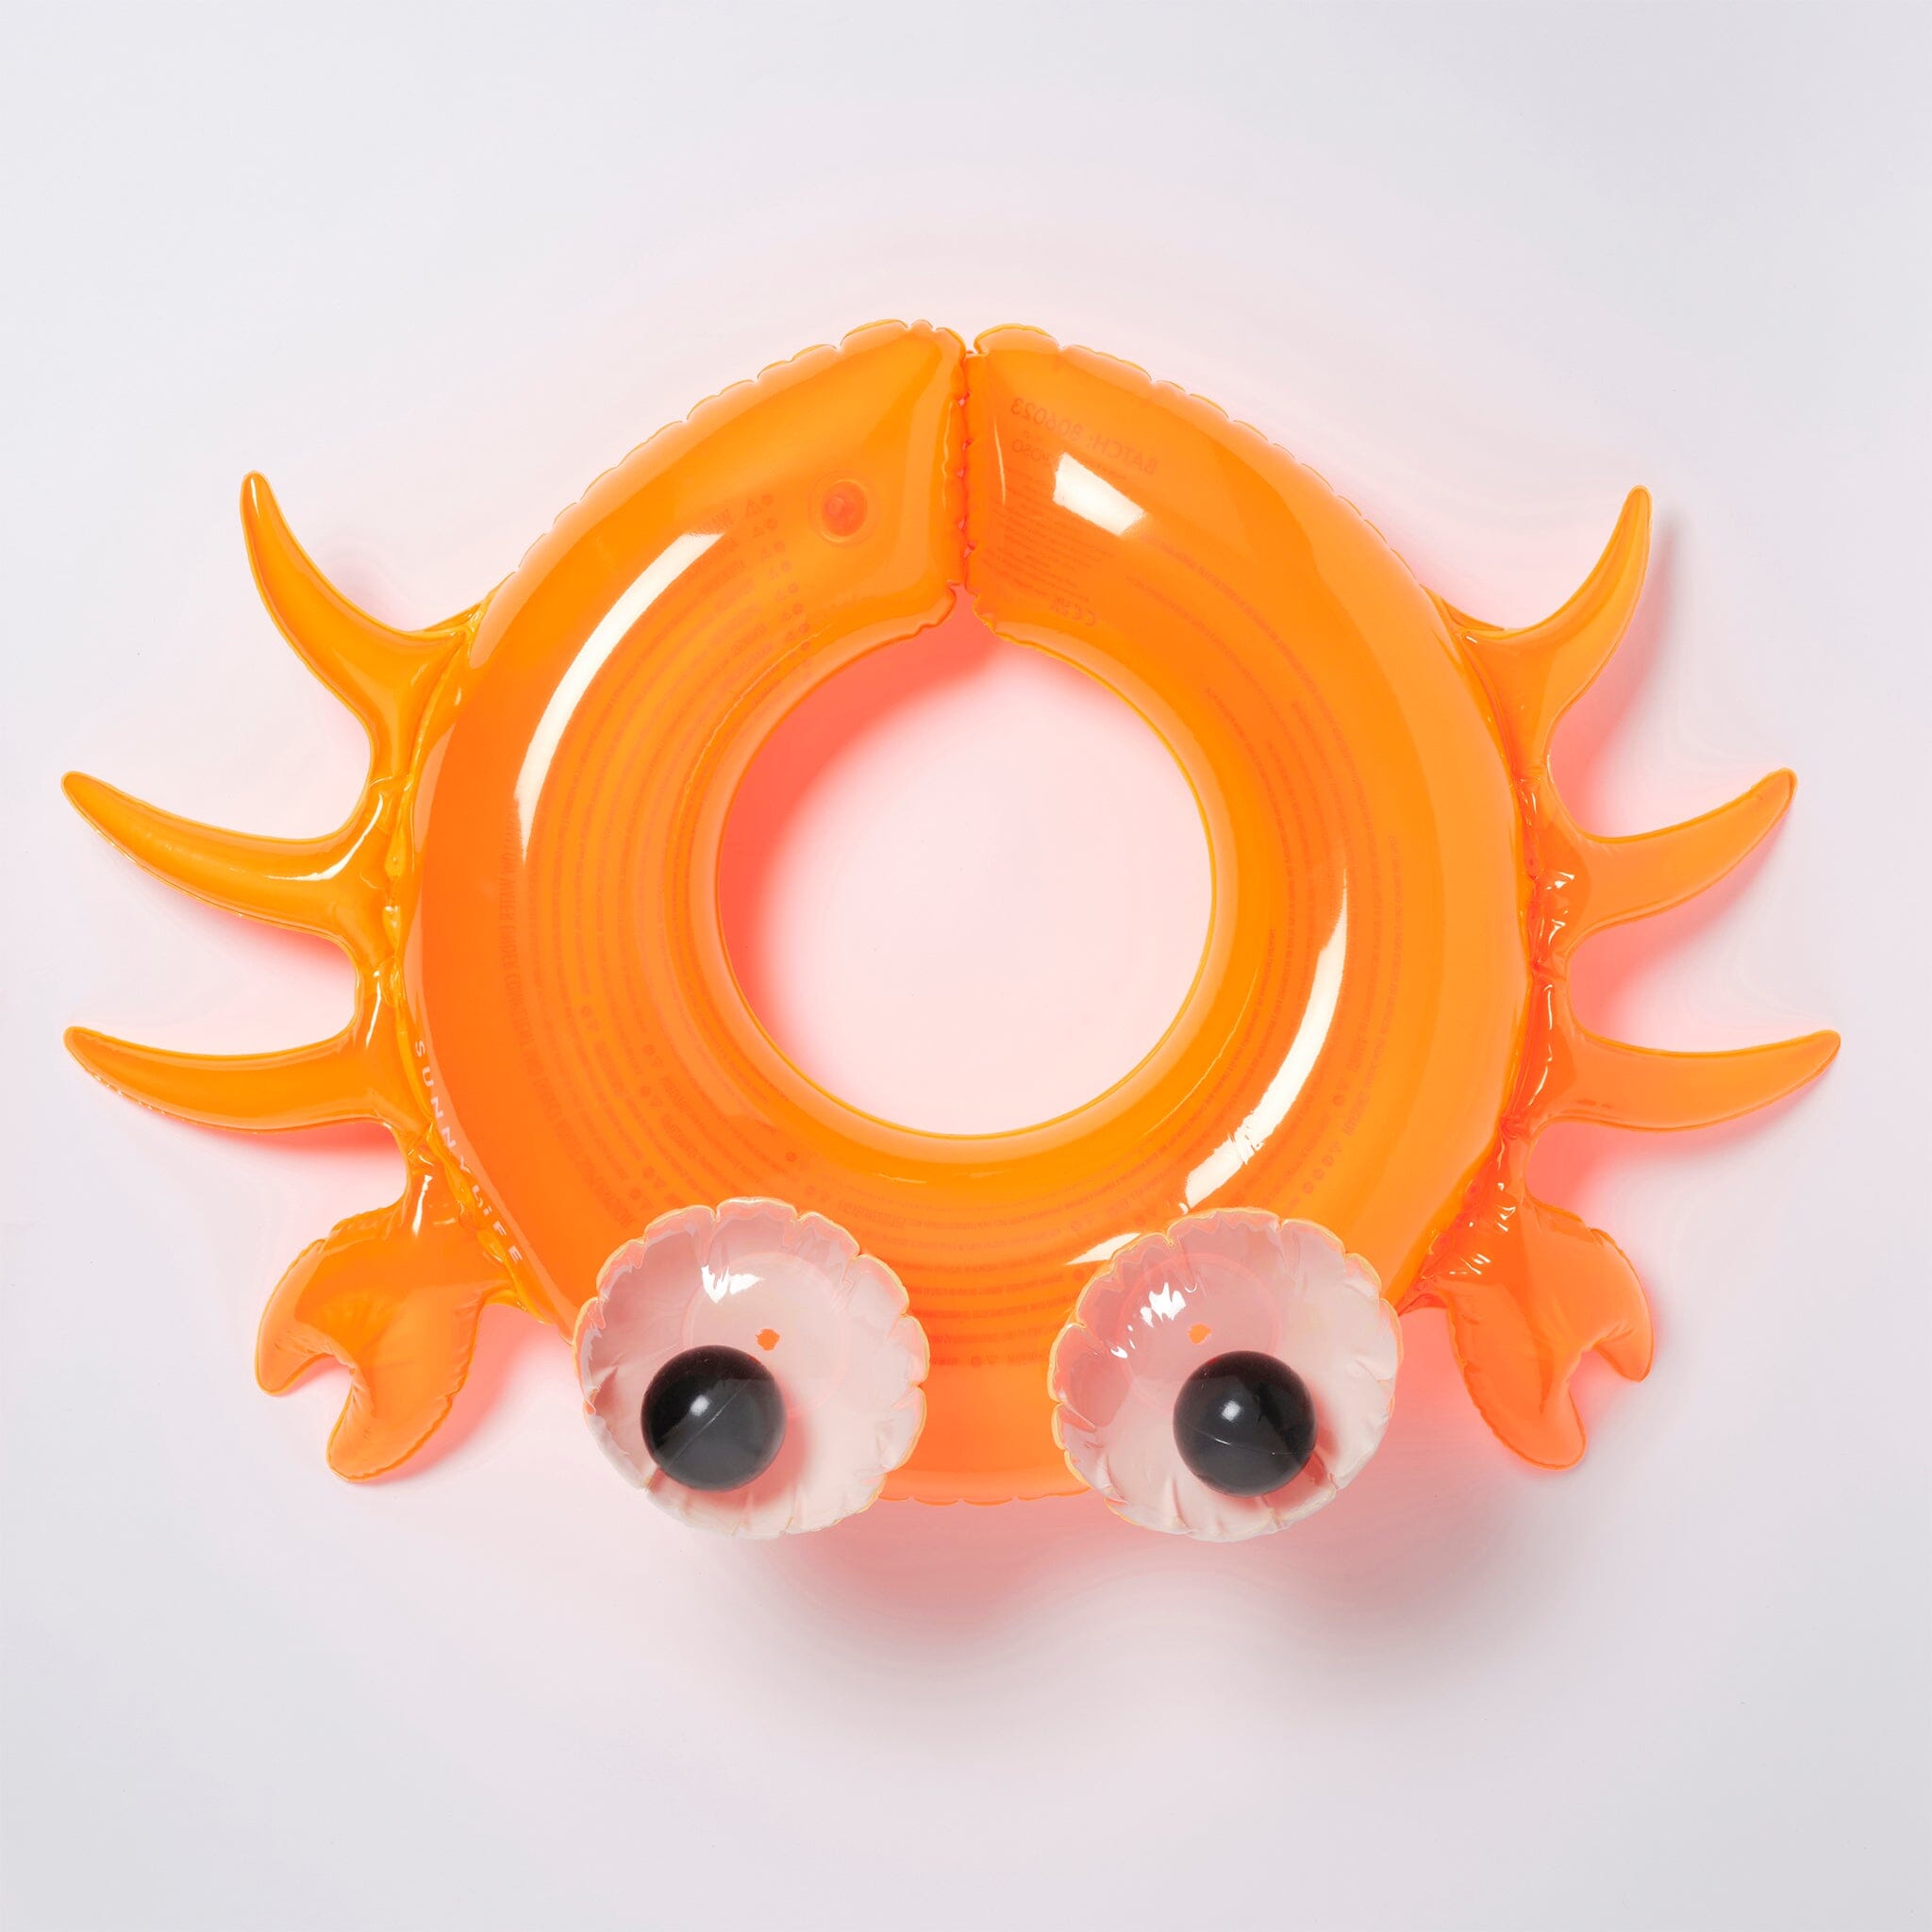 Sunnylife | Kiddy Pool Ring - Sonny the Sea Creature - Neon Orange CUTENESS Sunnylife